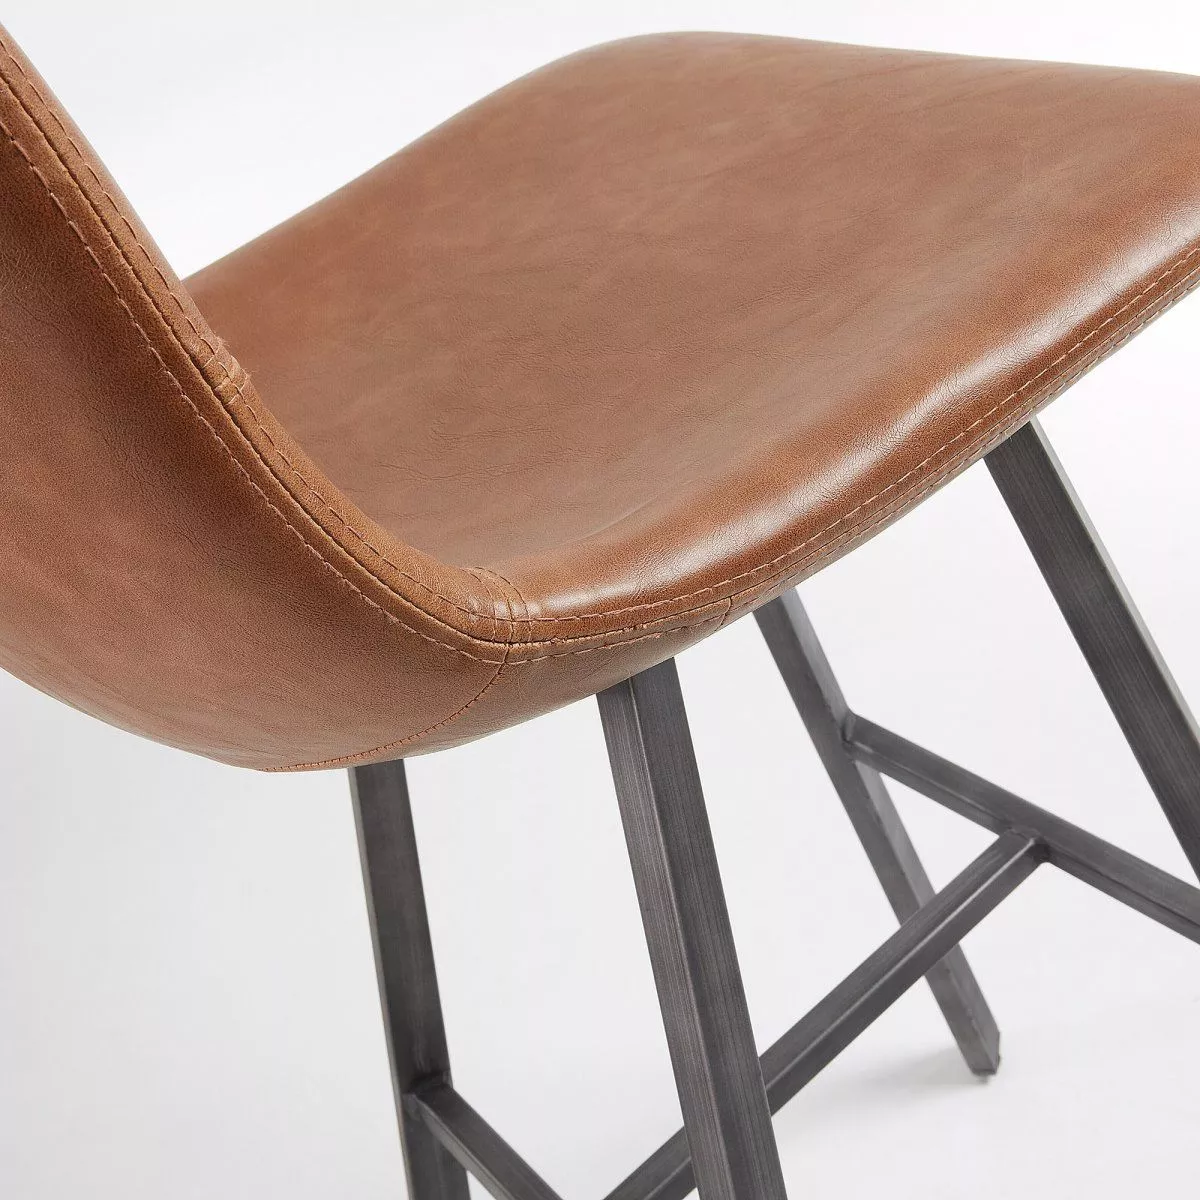 Барный стул La Forma Trac коричневый